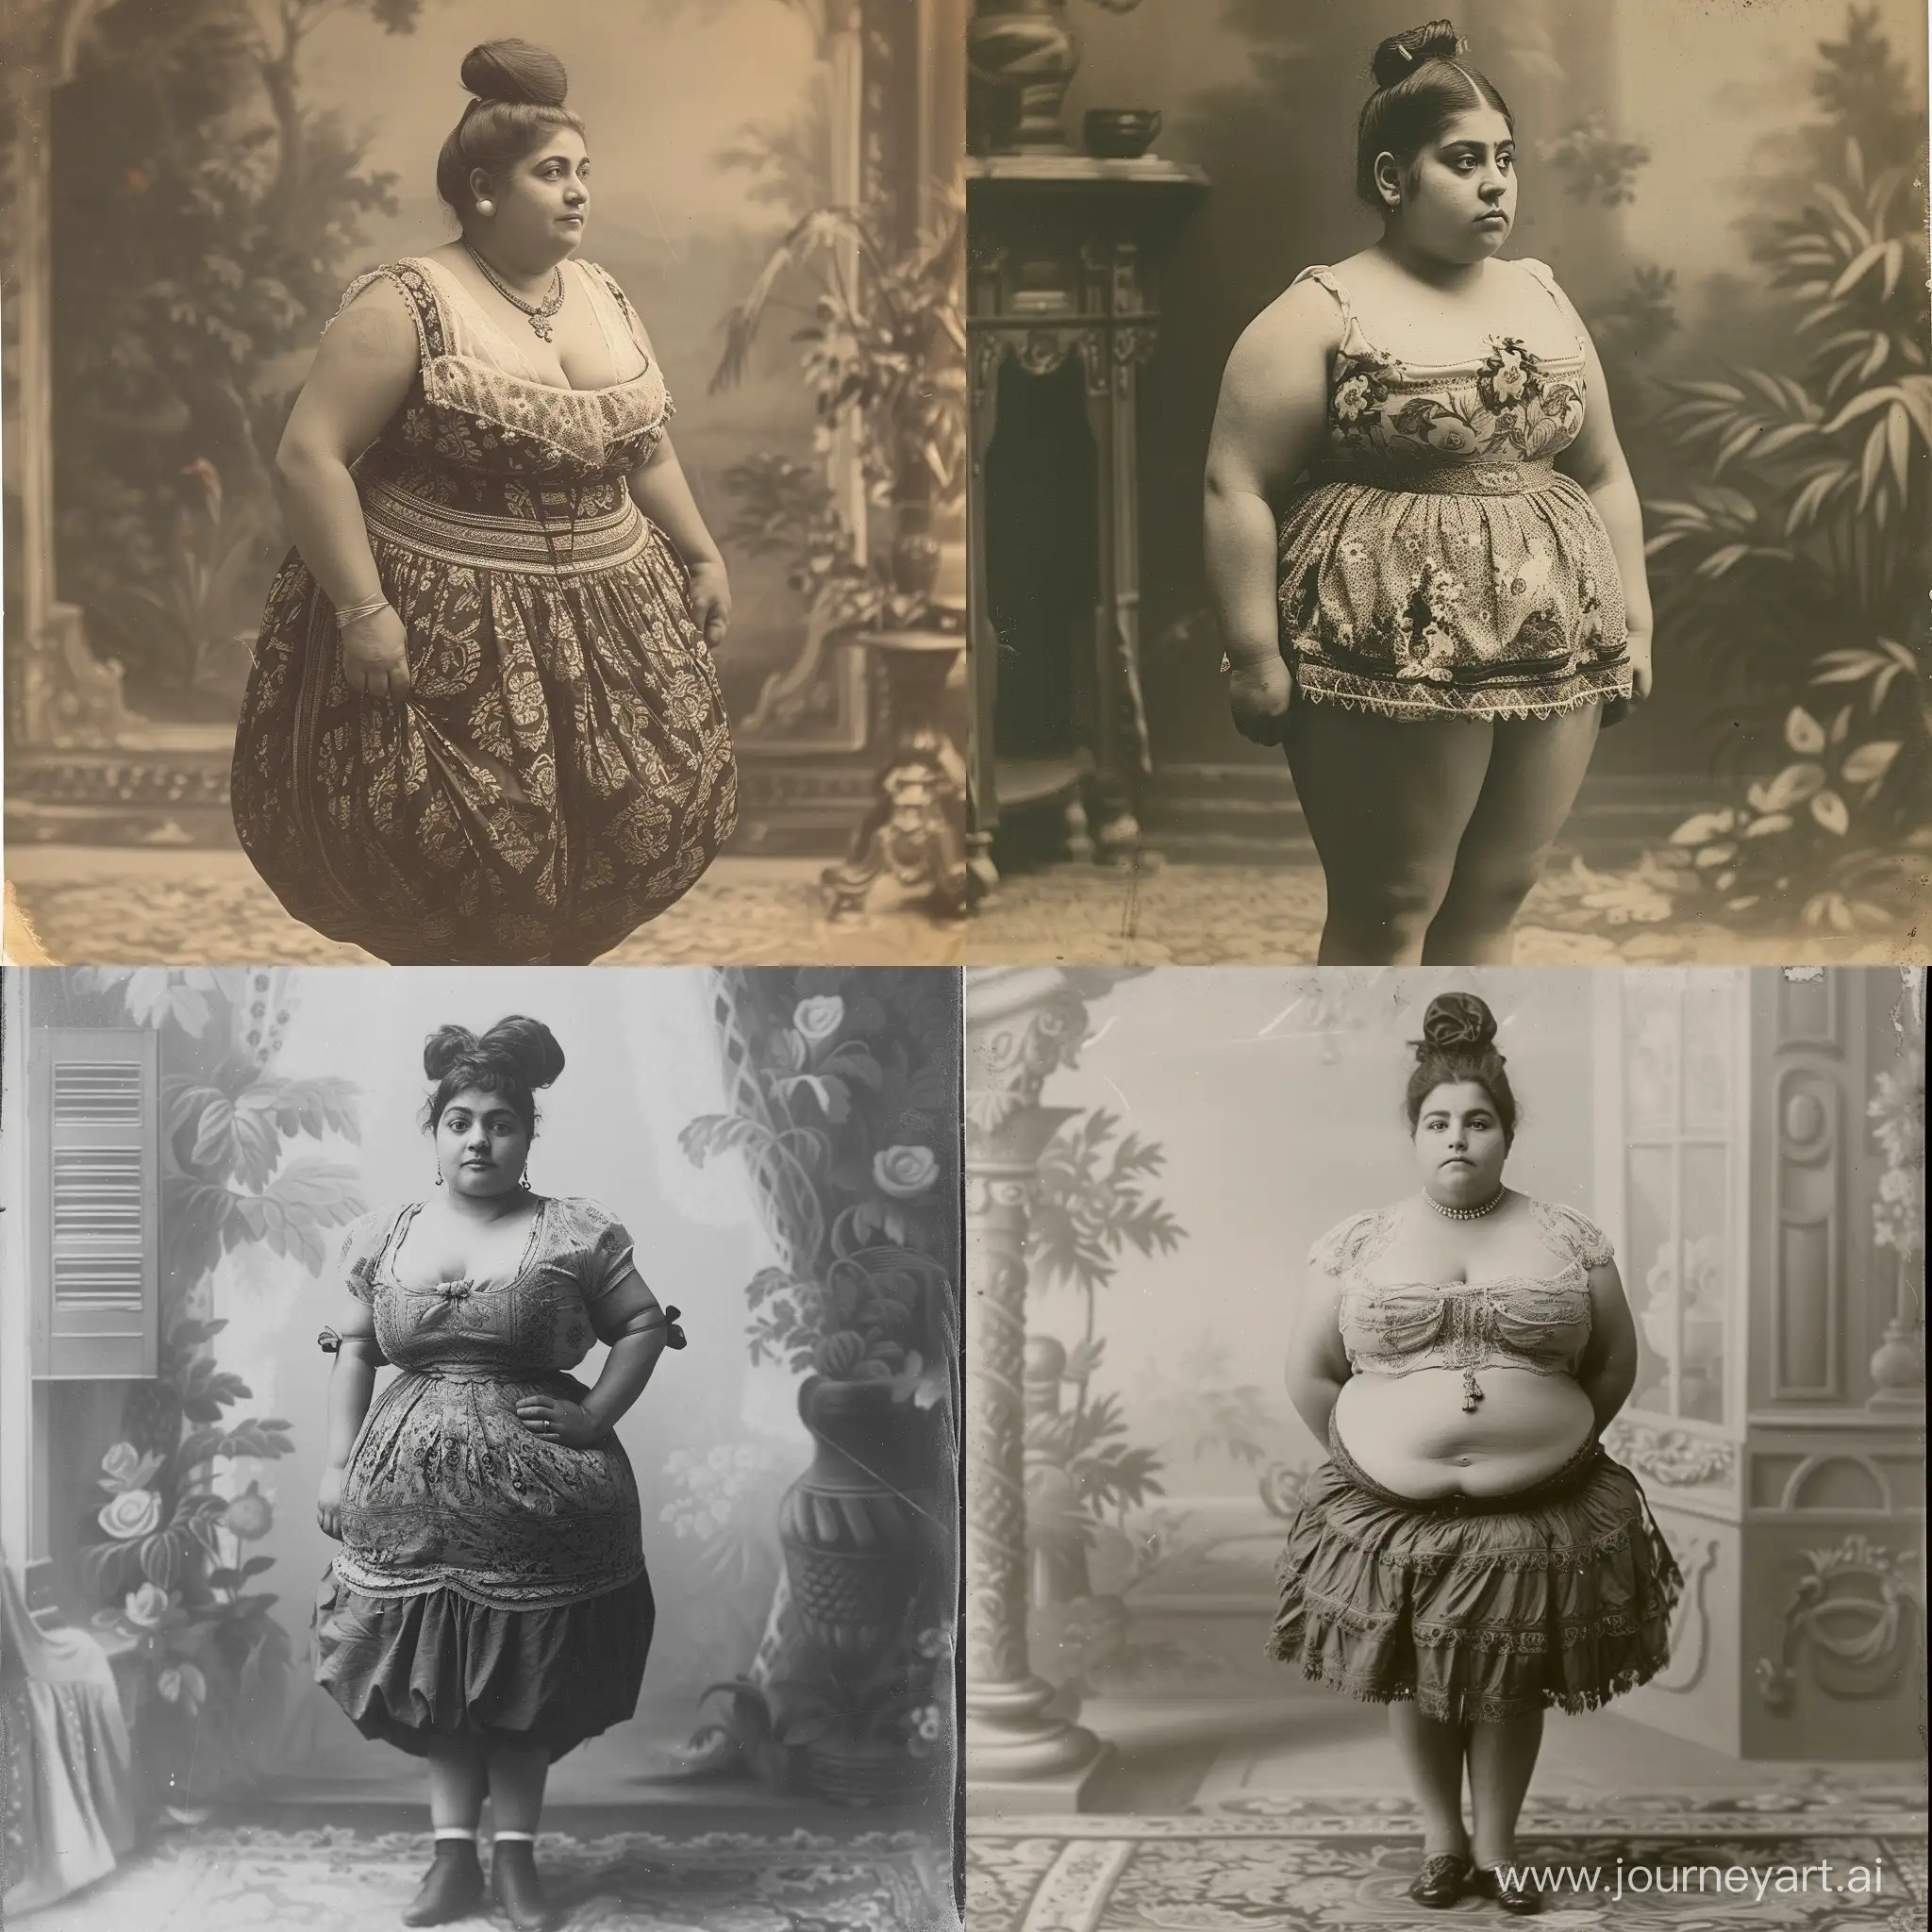 VintageInspired-Portrait-Armenian-Girl-in-Tight-Short-Skirt-with-Bun-Hair-1800s-Style